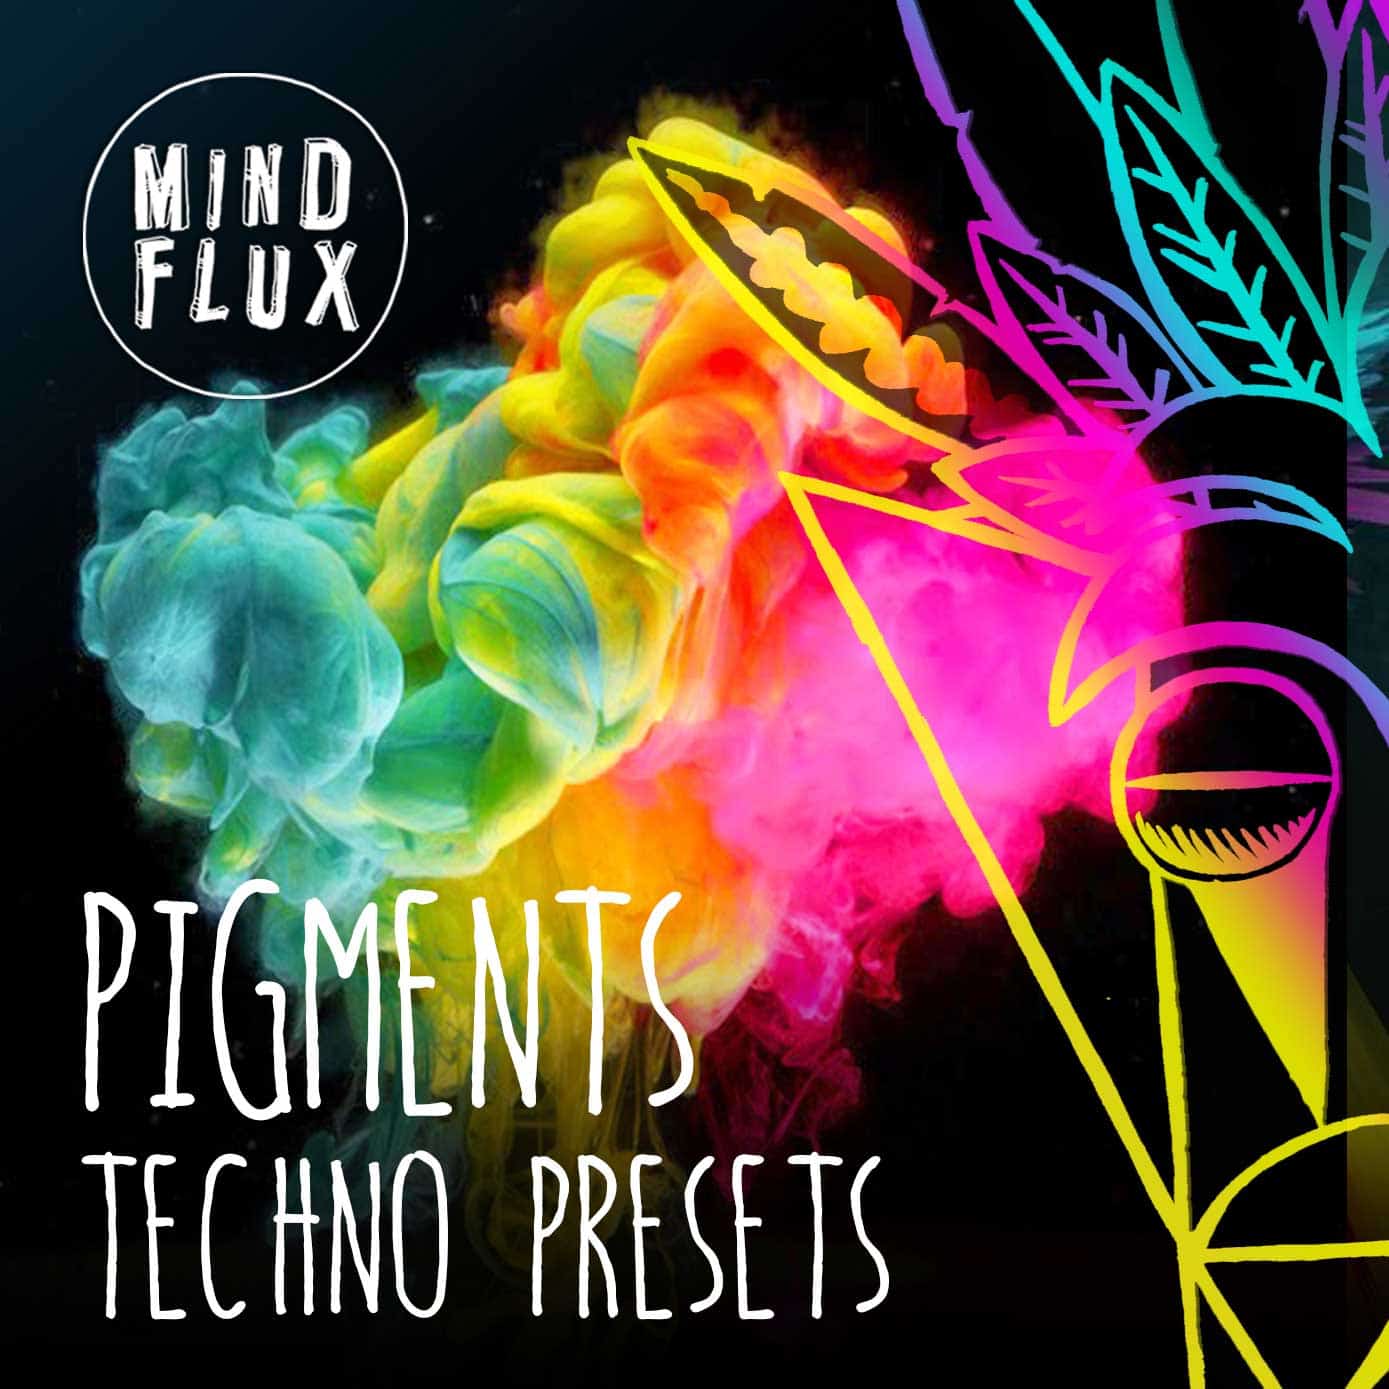 mindflux-pigments-presets-1000WEB